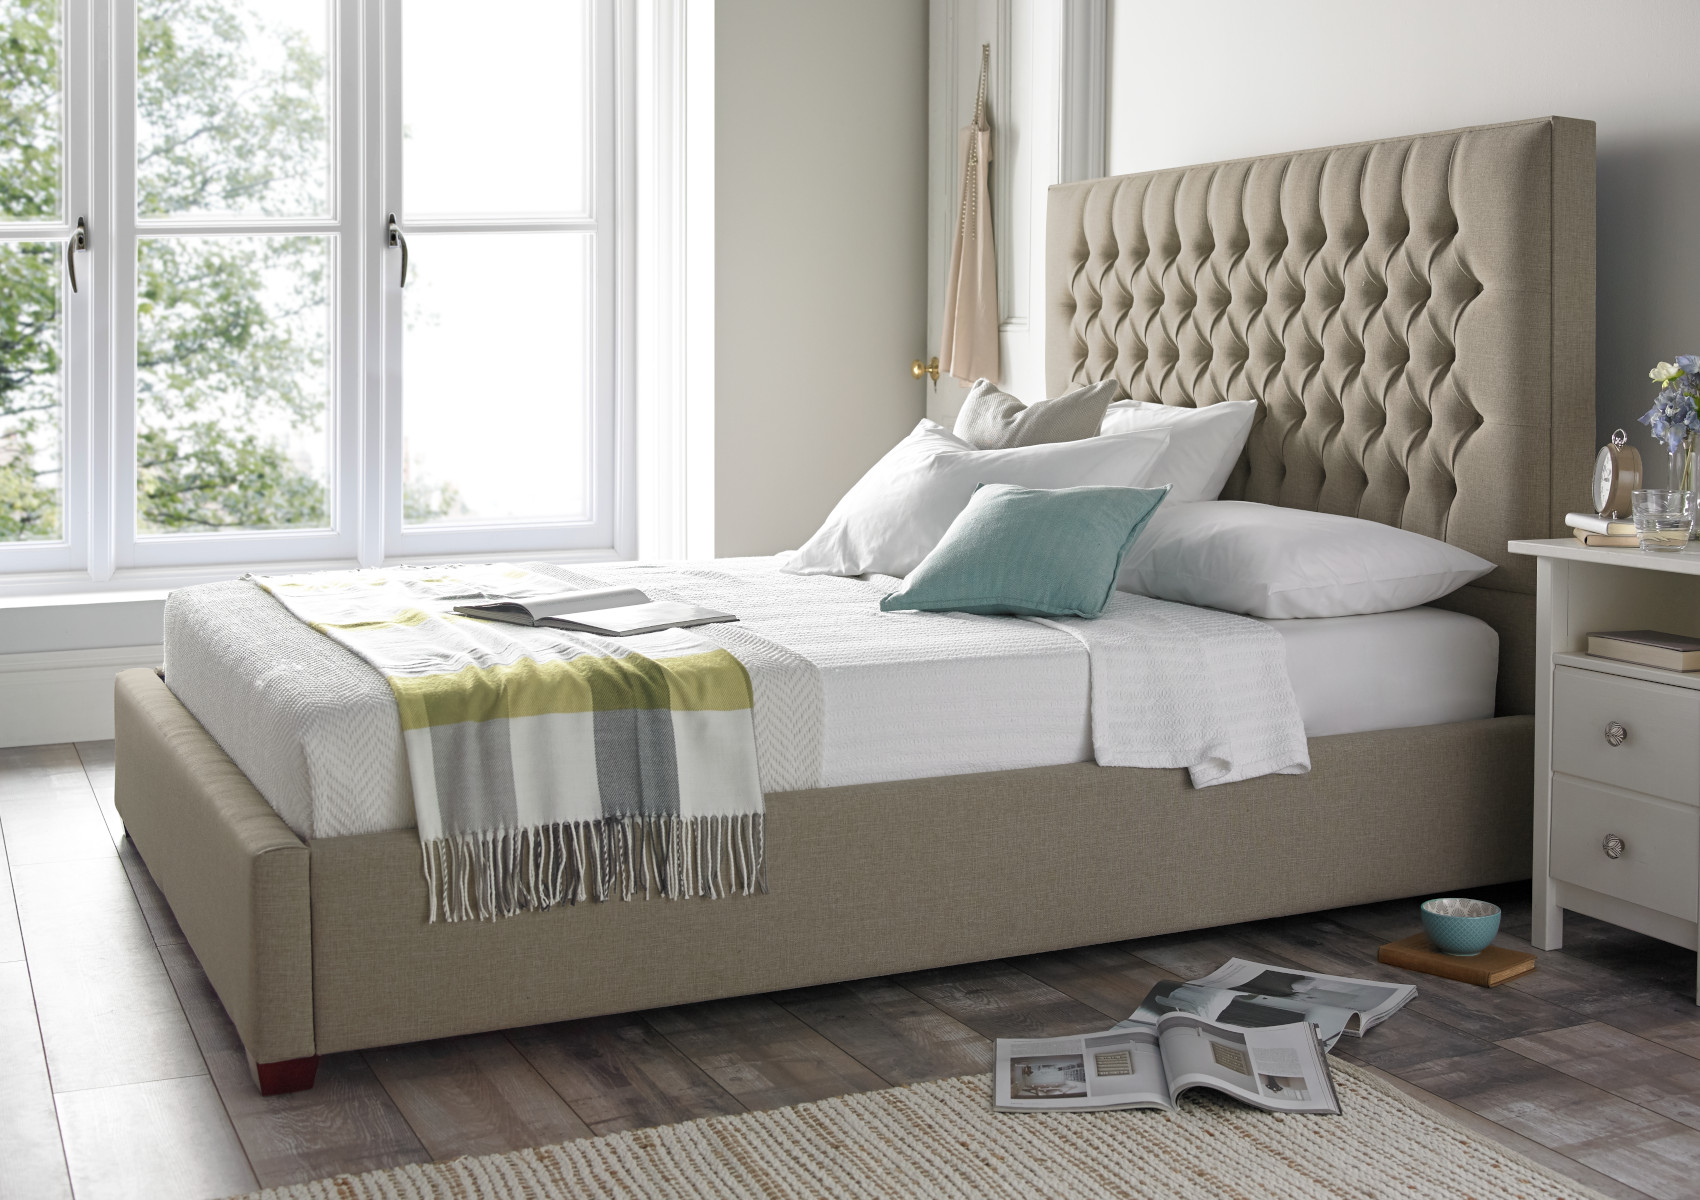 View Belgravia Arran Natural Upholstered Super King Bed Time4Sleep information